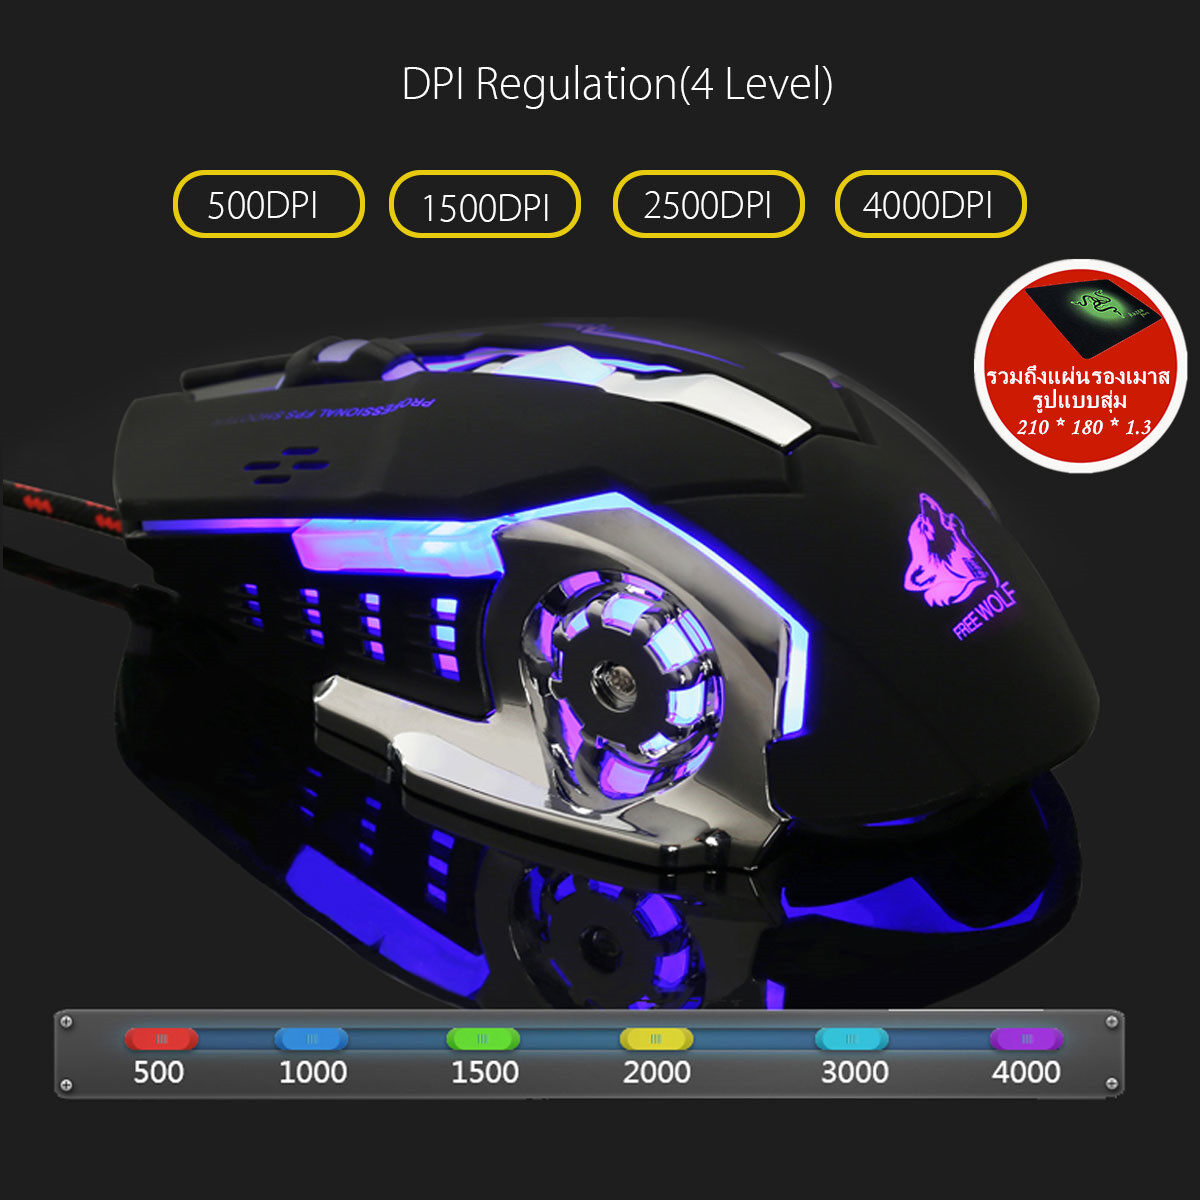 ?UU?Optical Macro Key RGB Gaming Mouse เมาส์เกมมิ่ง ออฟติคอล ตั้งมาโครคีย์ได้ ความแม่นยำสูงปรับ DPI200- 4800 เหมาะกับเกม MMORPG (BNS) FPS MoBA เกมคอมพิวเตอร V5